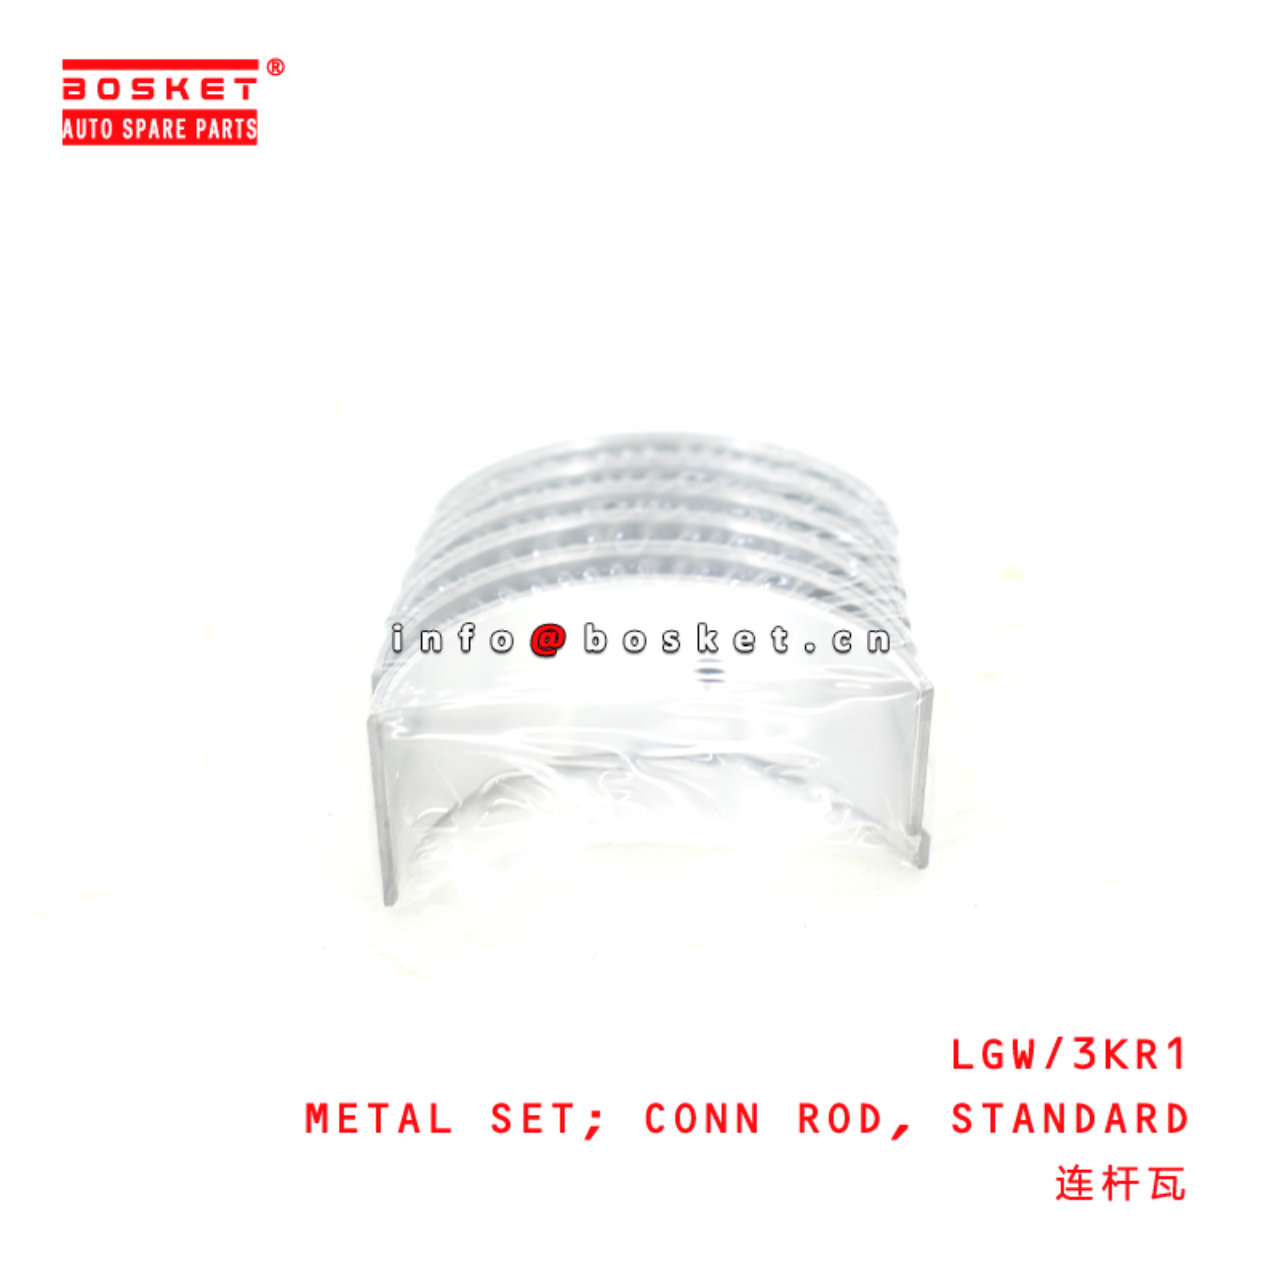 LGW/3KR1 Standard Connecting Rod Meatal Set Suitable for ISUZU 3KR1